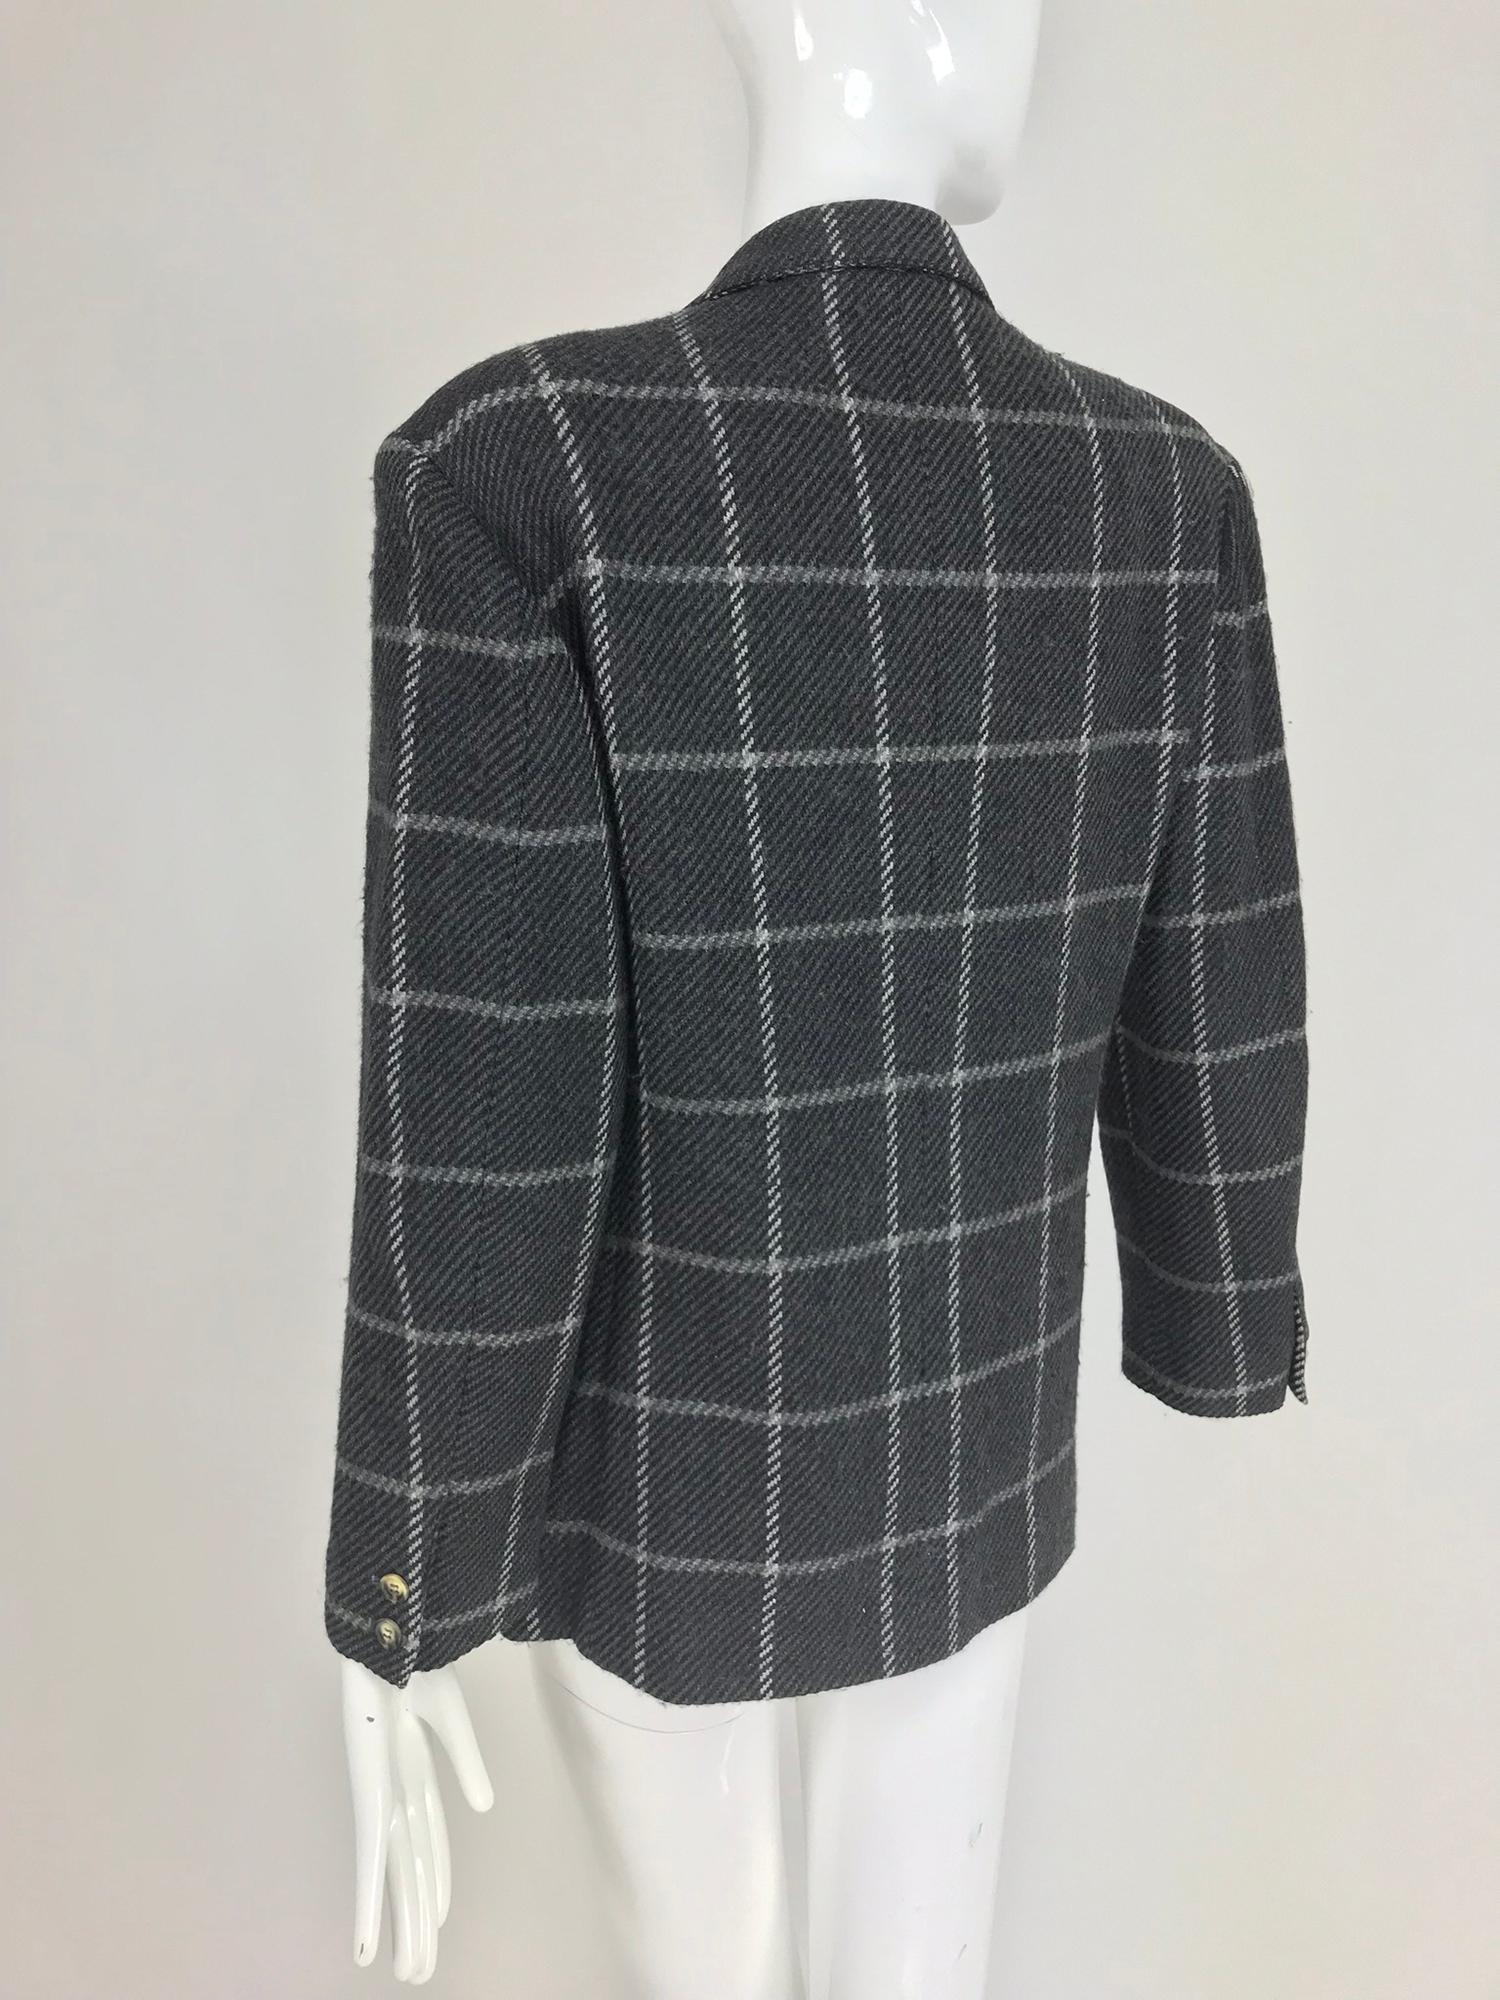 Gucci Charcoal Windowpane Check Wool Cashmere Blazer 1980s 4